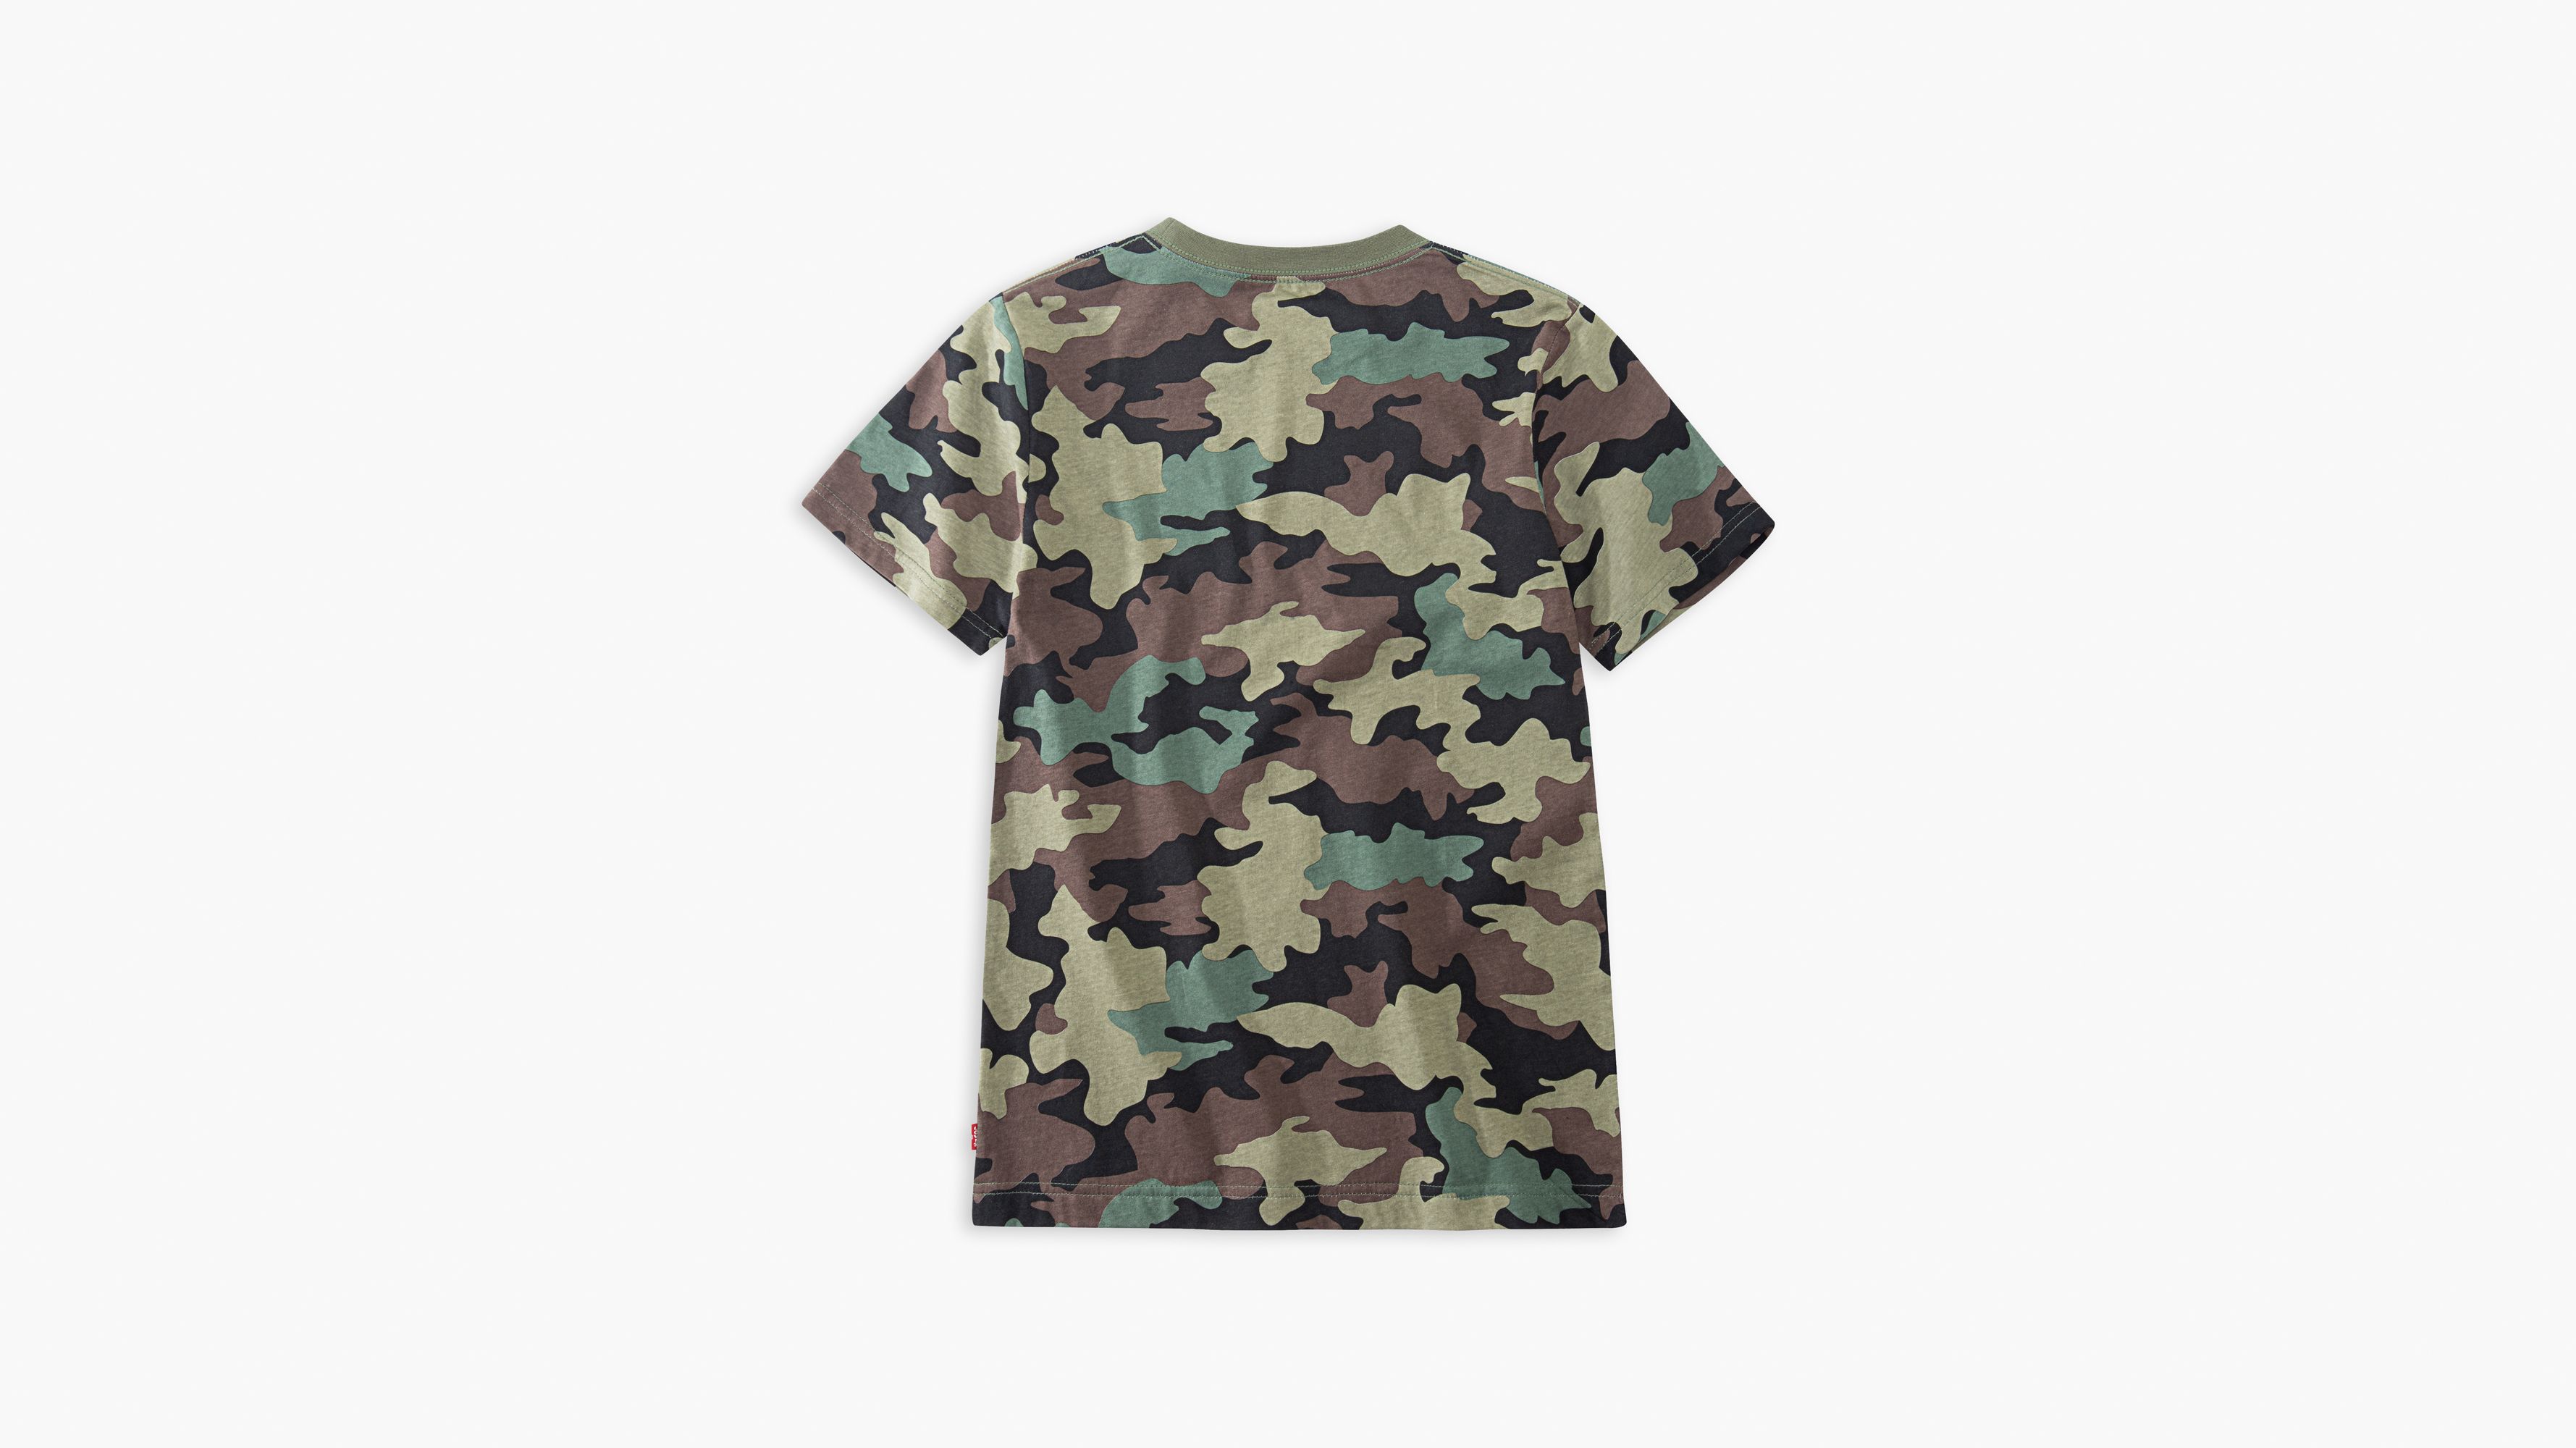 levis camouflage t shirt